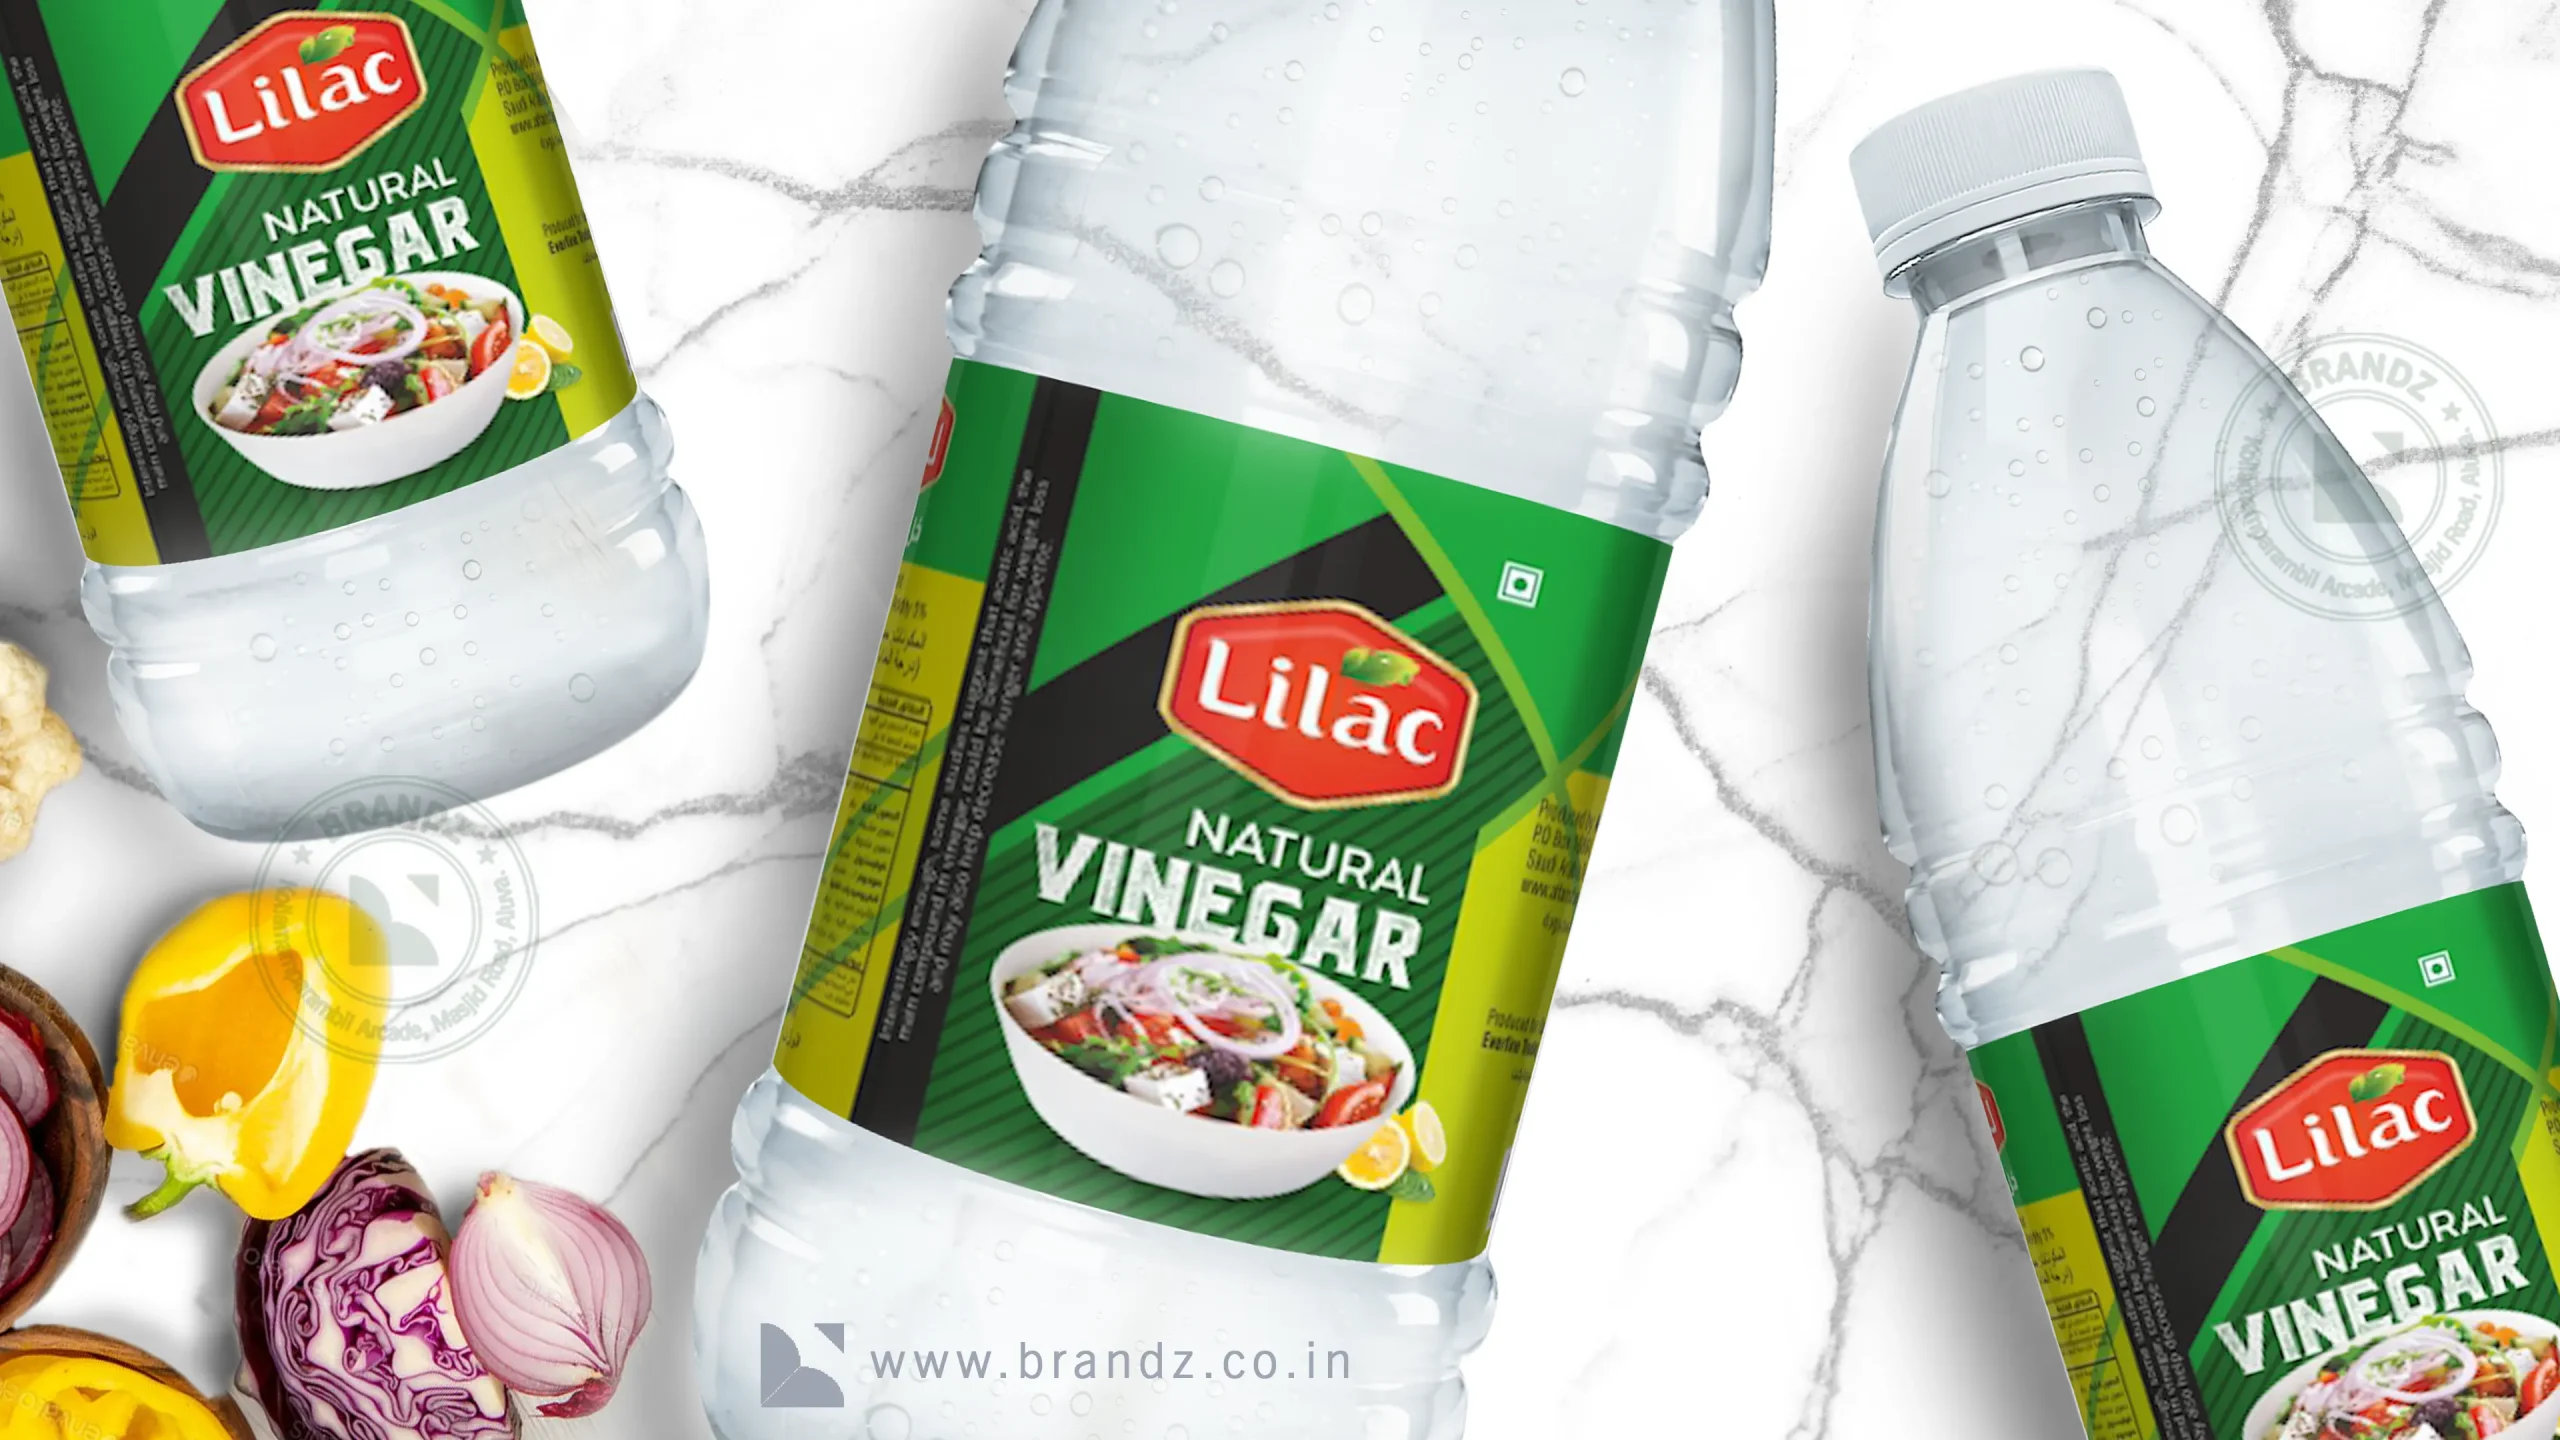 Lilac Natural Vinegar Label